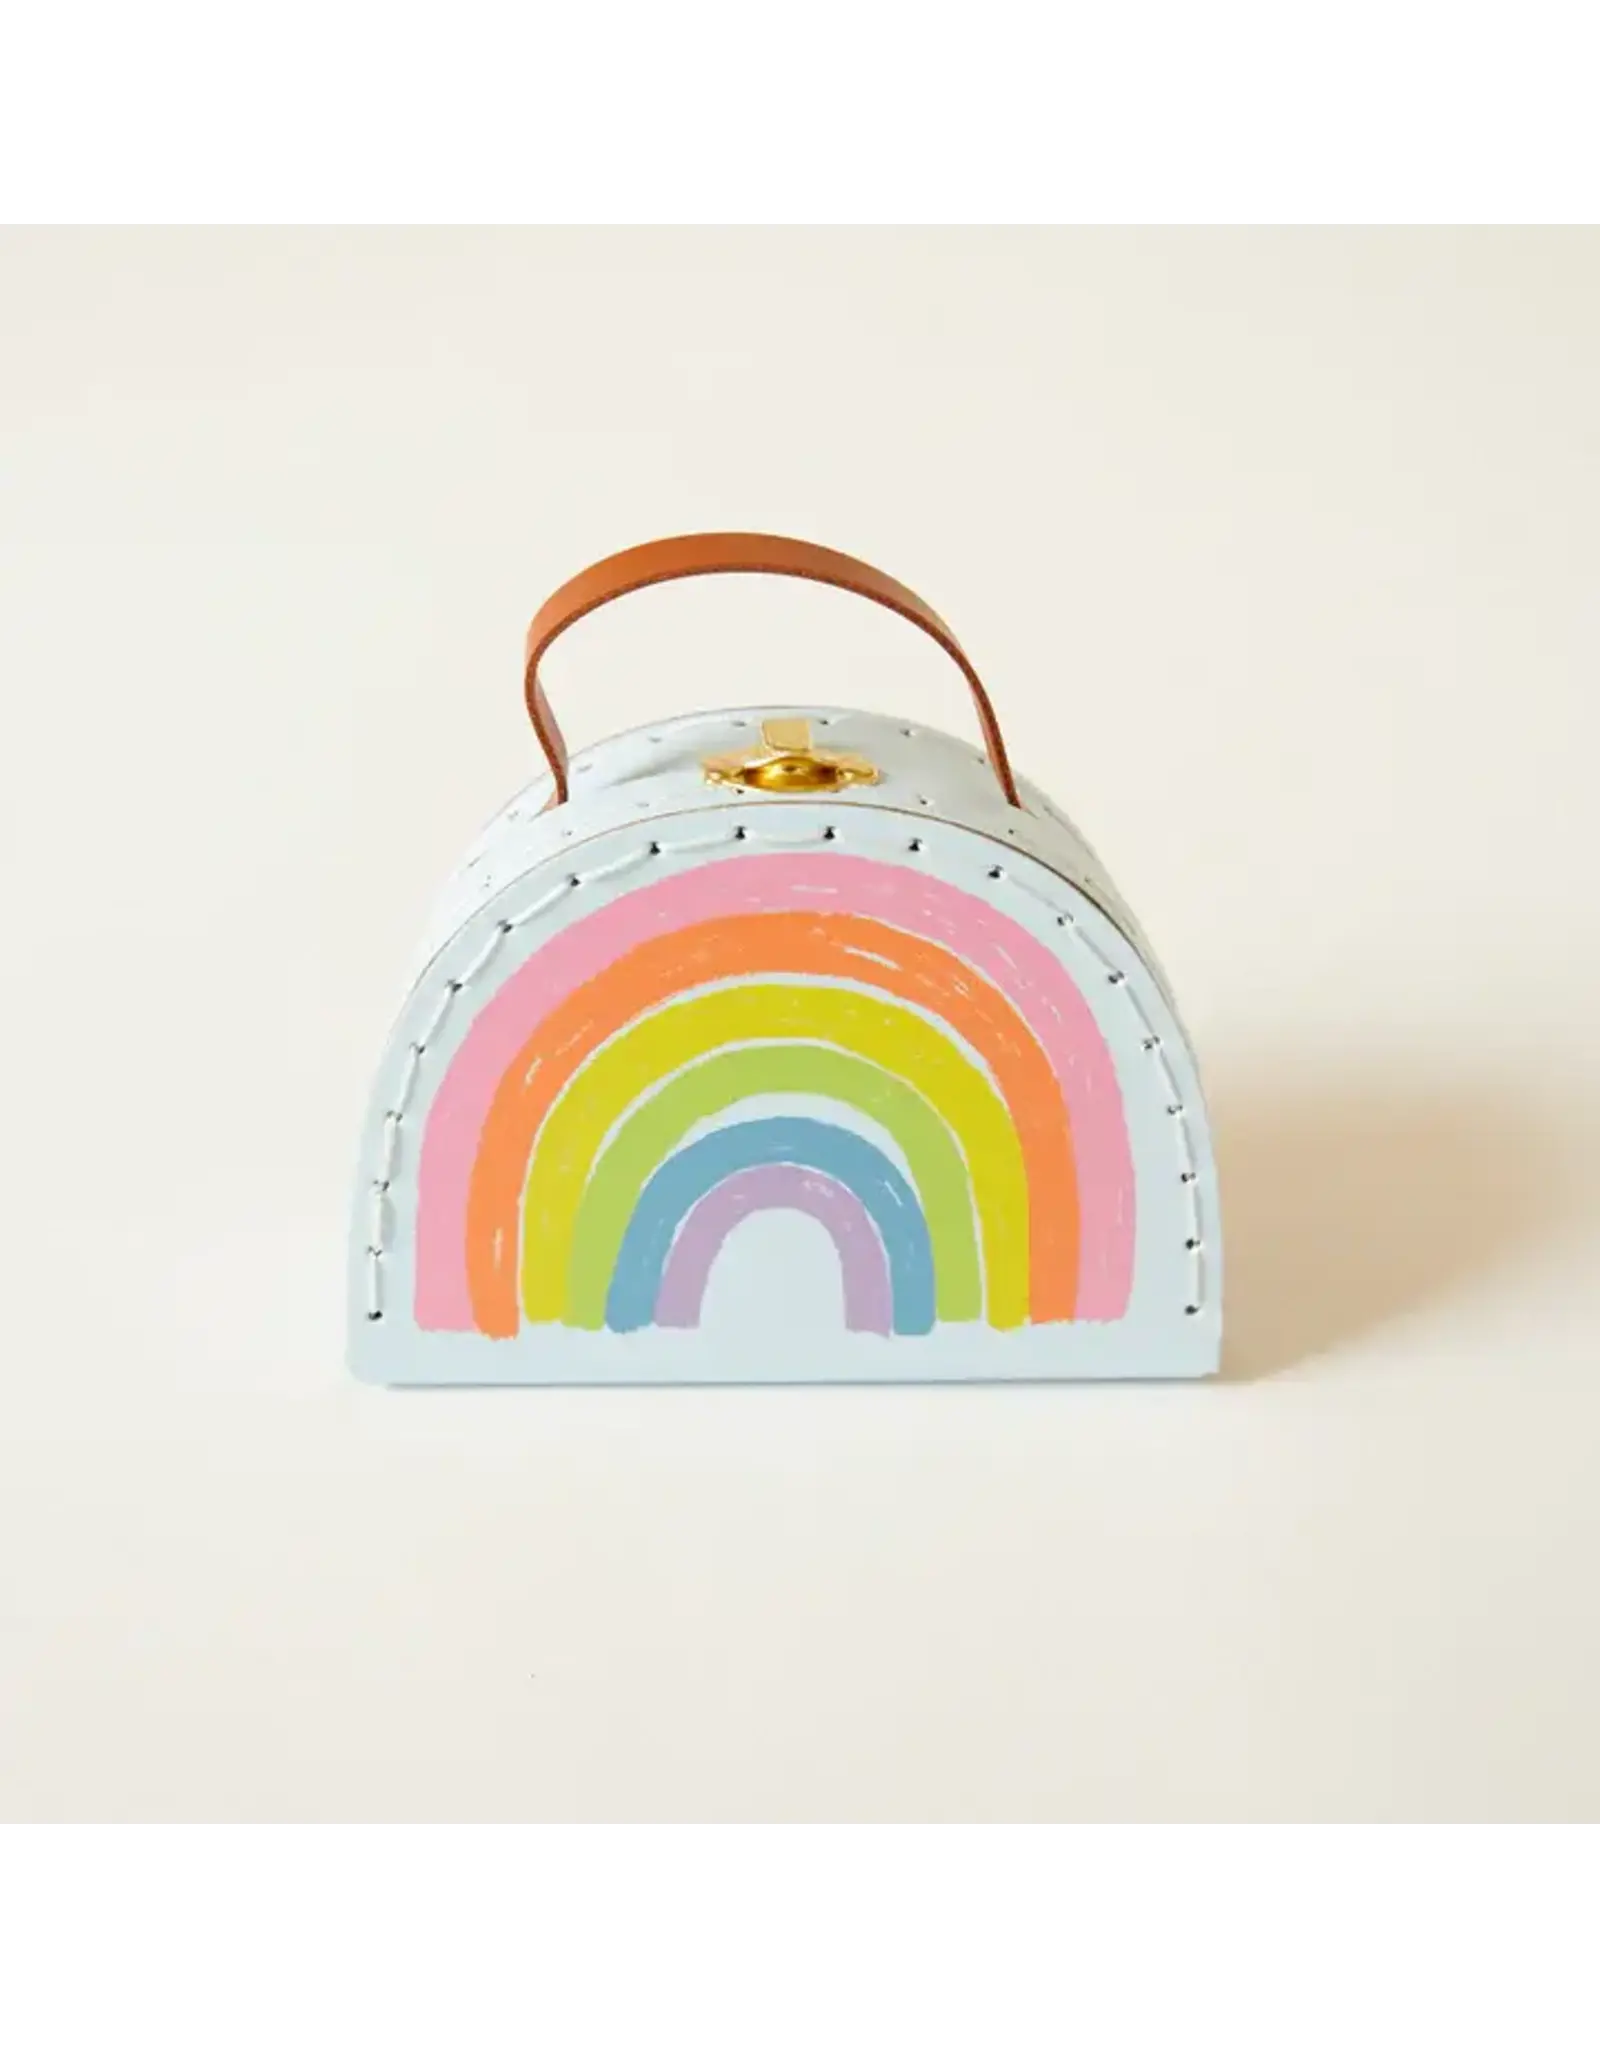 Sarah's Silks Mini Rainbow Suitcase